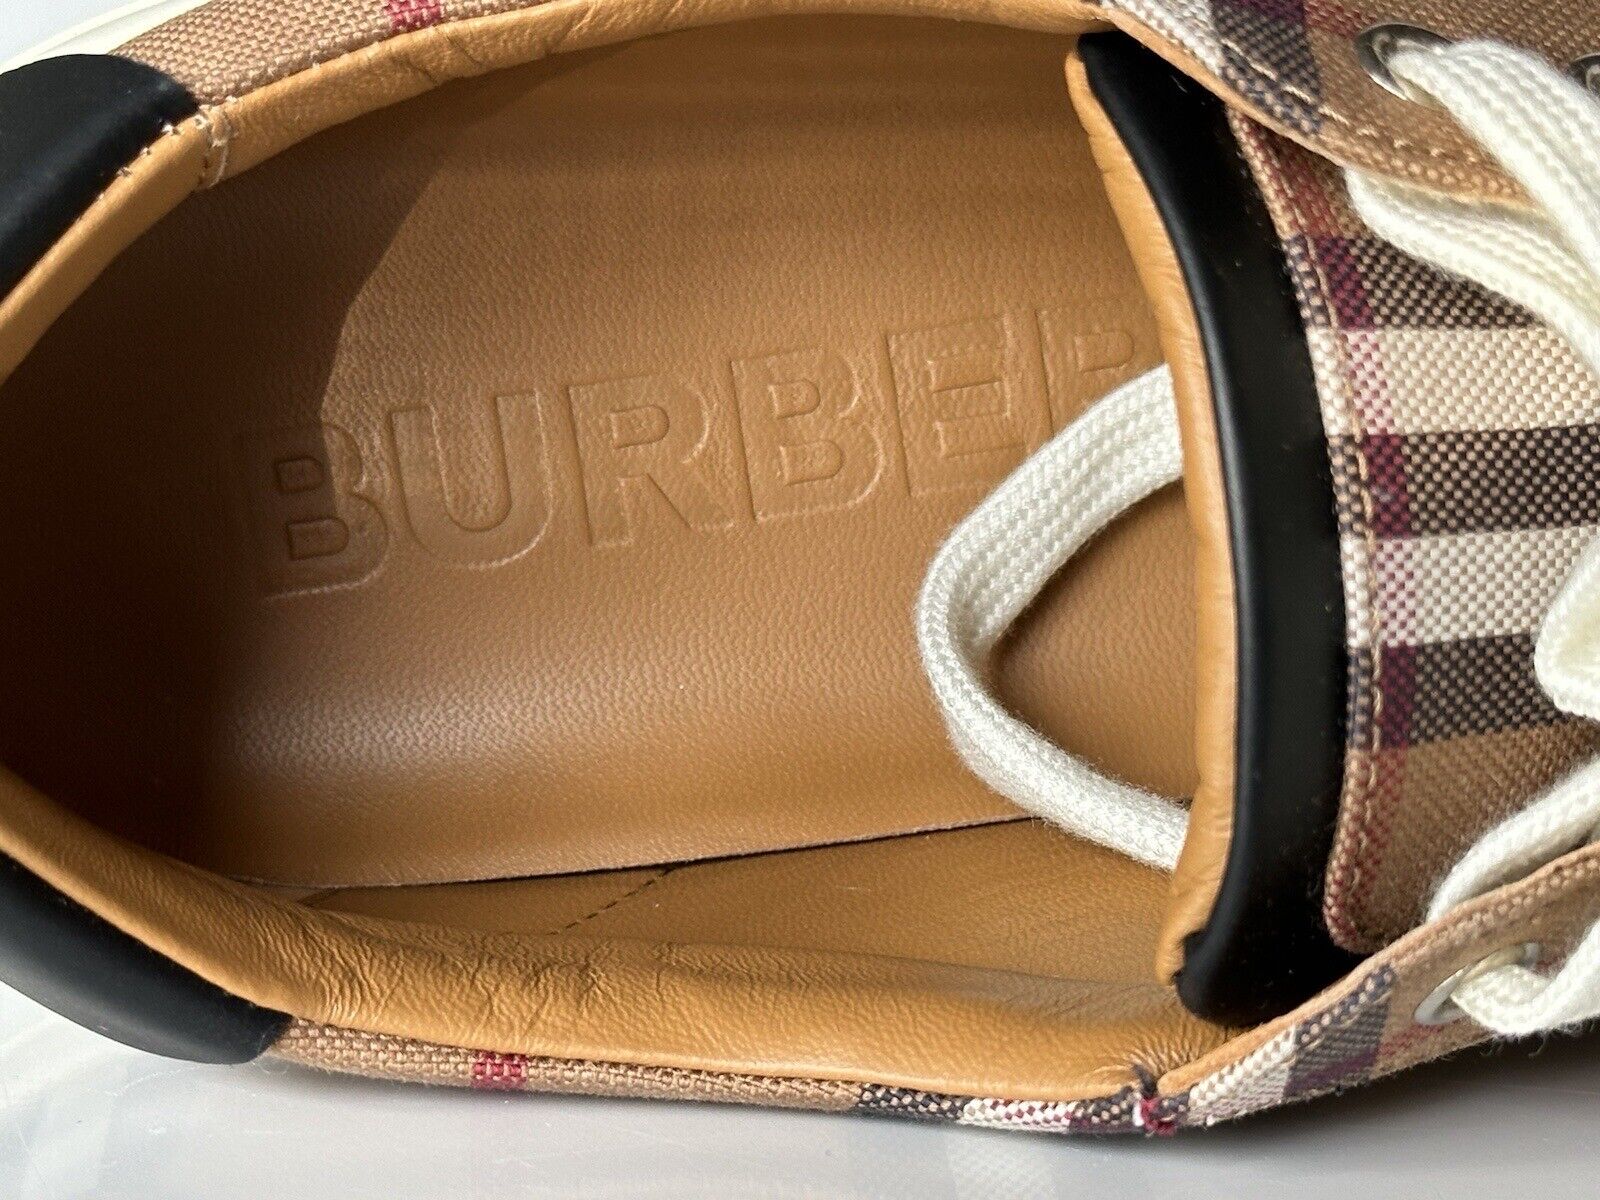 NIB $650 Burberry Men's Birch Brown Checks Low Top Sneakers 11 US (44) 8048156